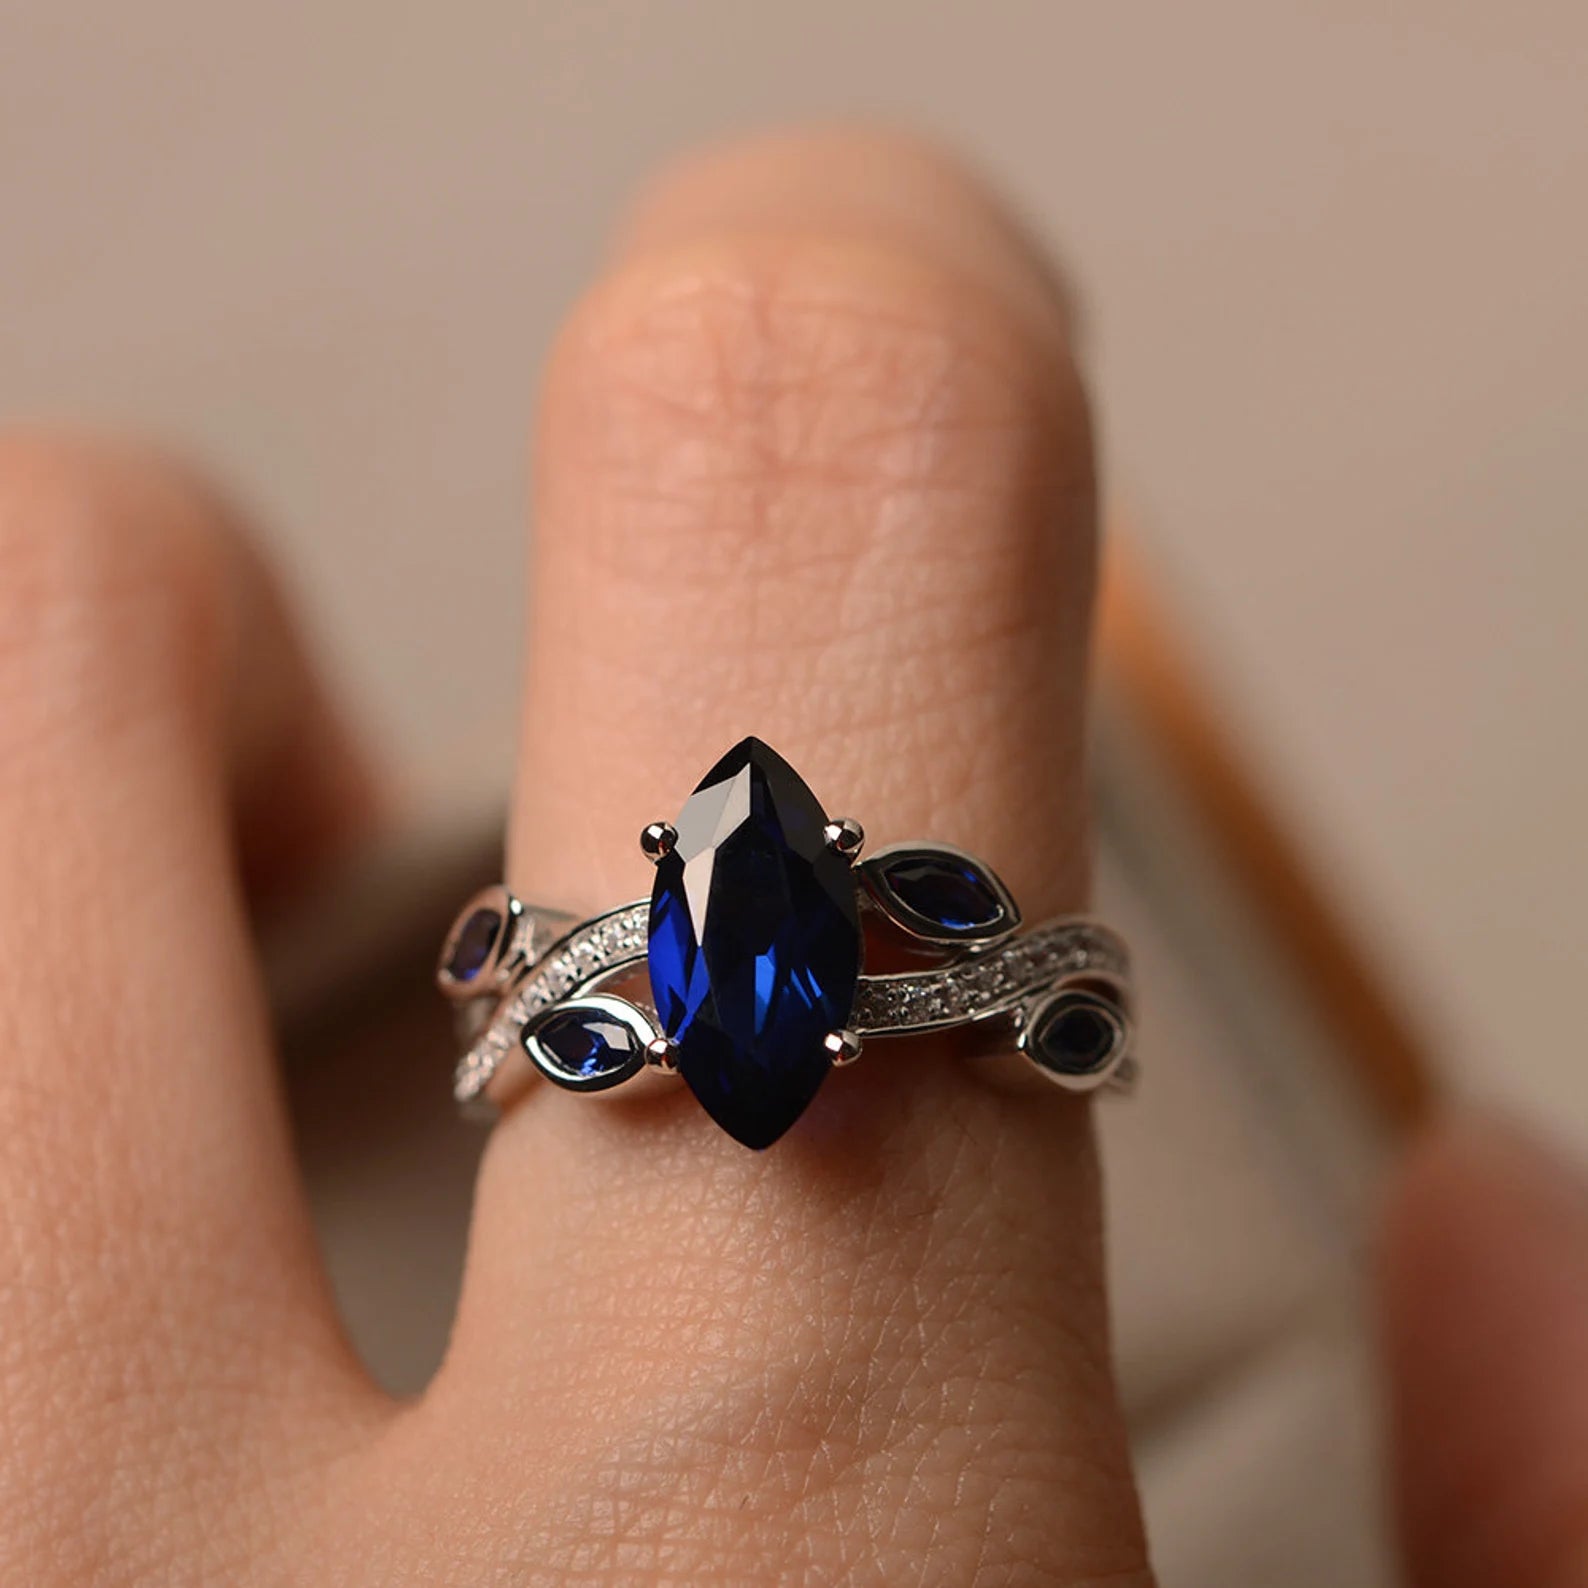 Marquise cut blue sapphire stone ring